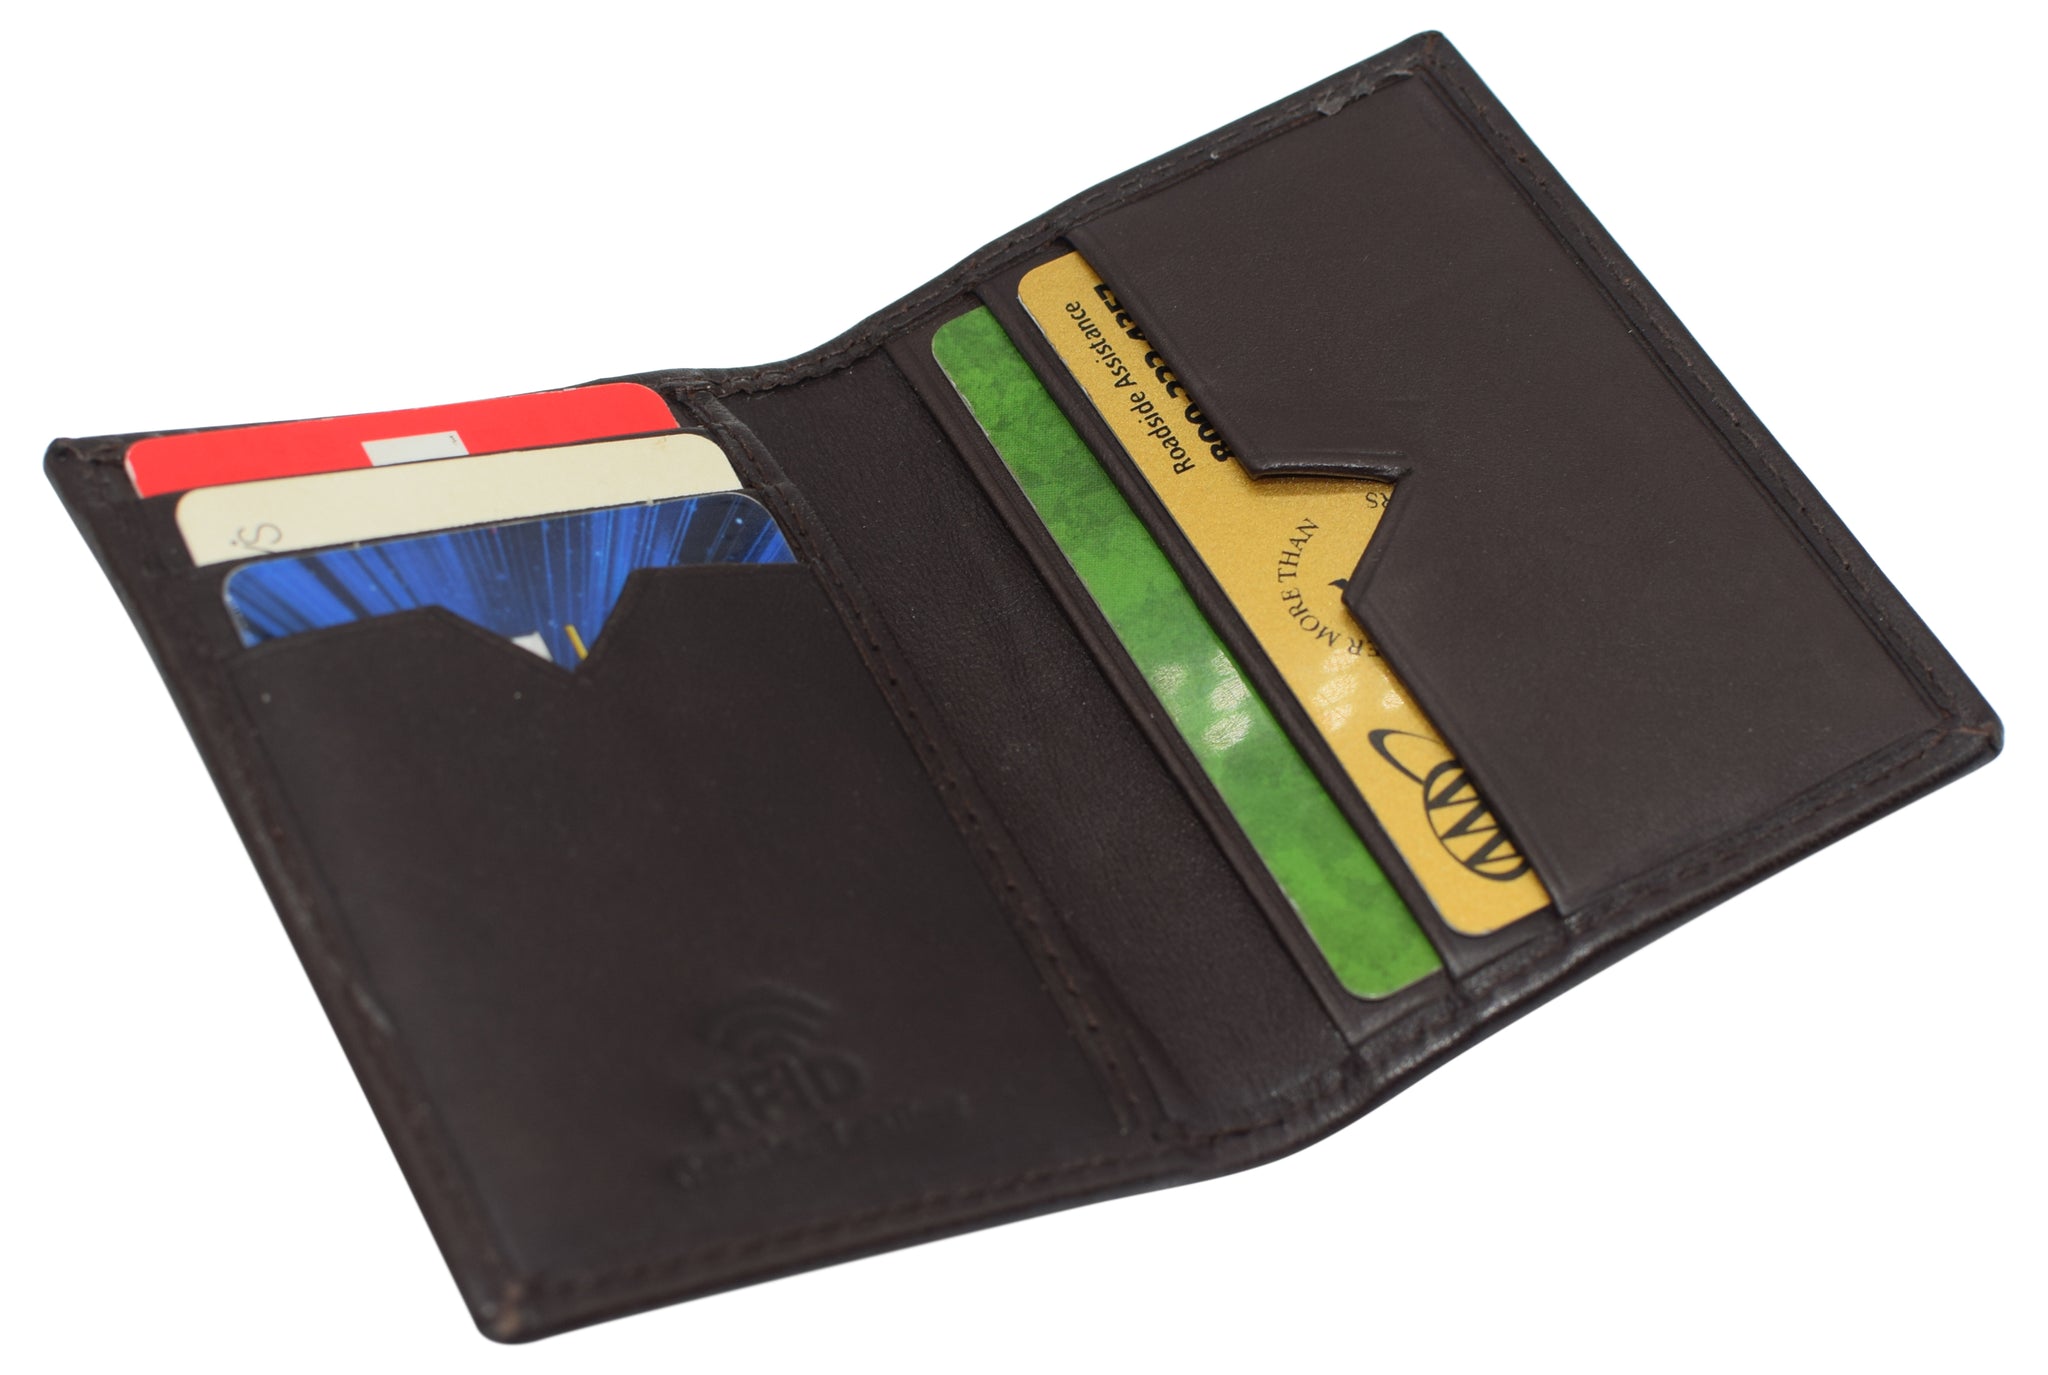 Front Pocket Wallet Slim for Men RFID Minimalist Wallets Credit Card Small  Leather Wallet